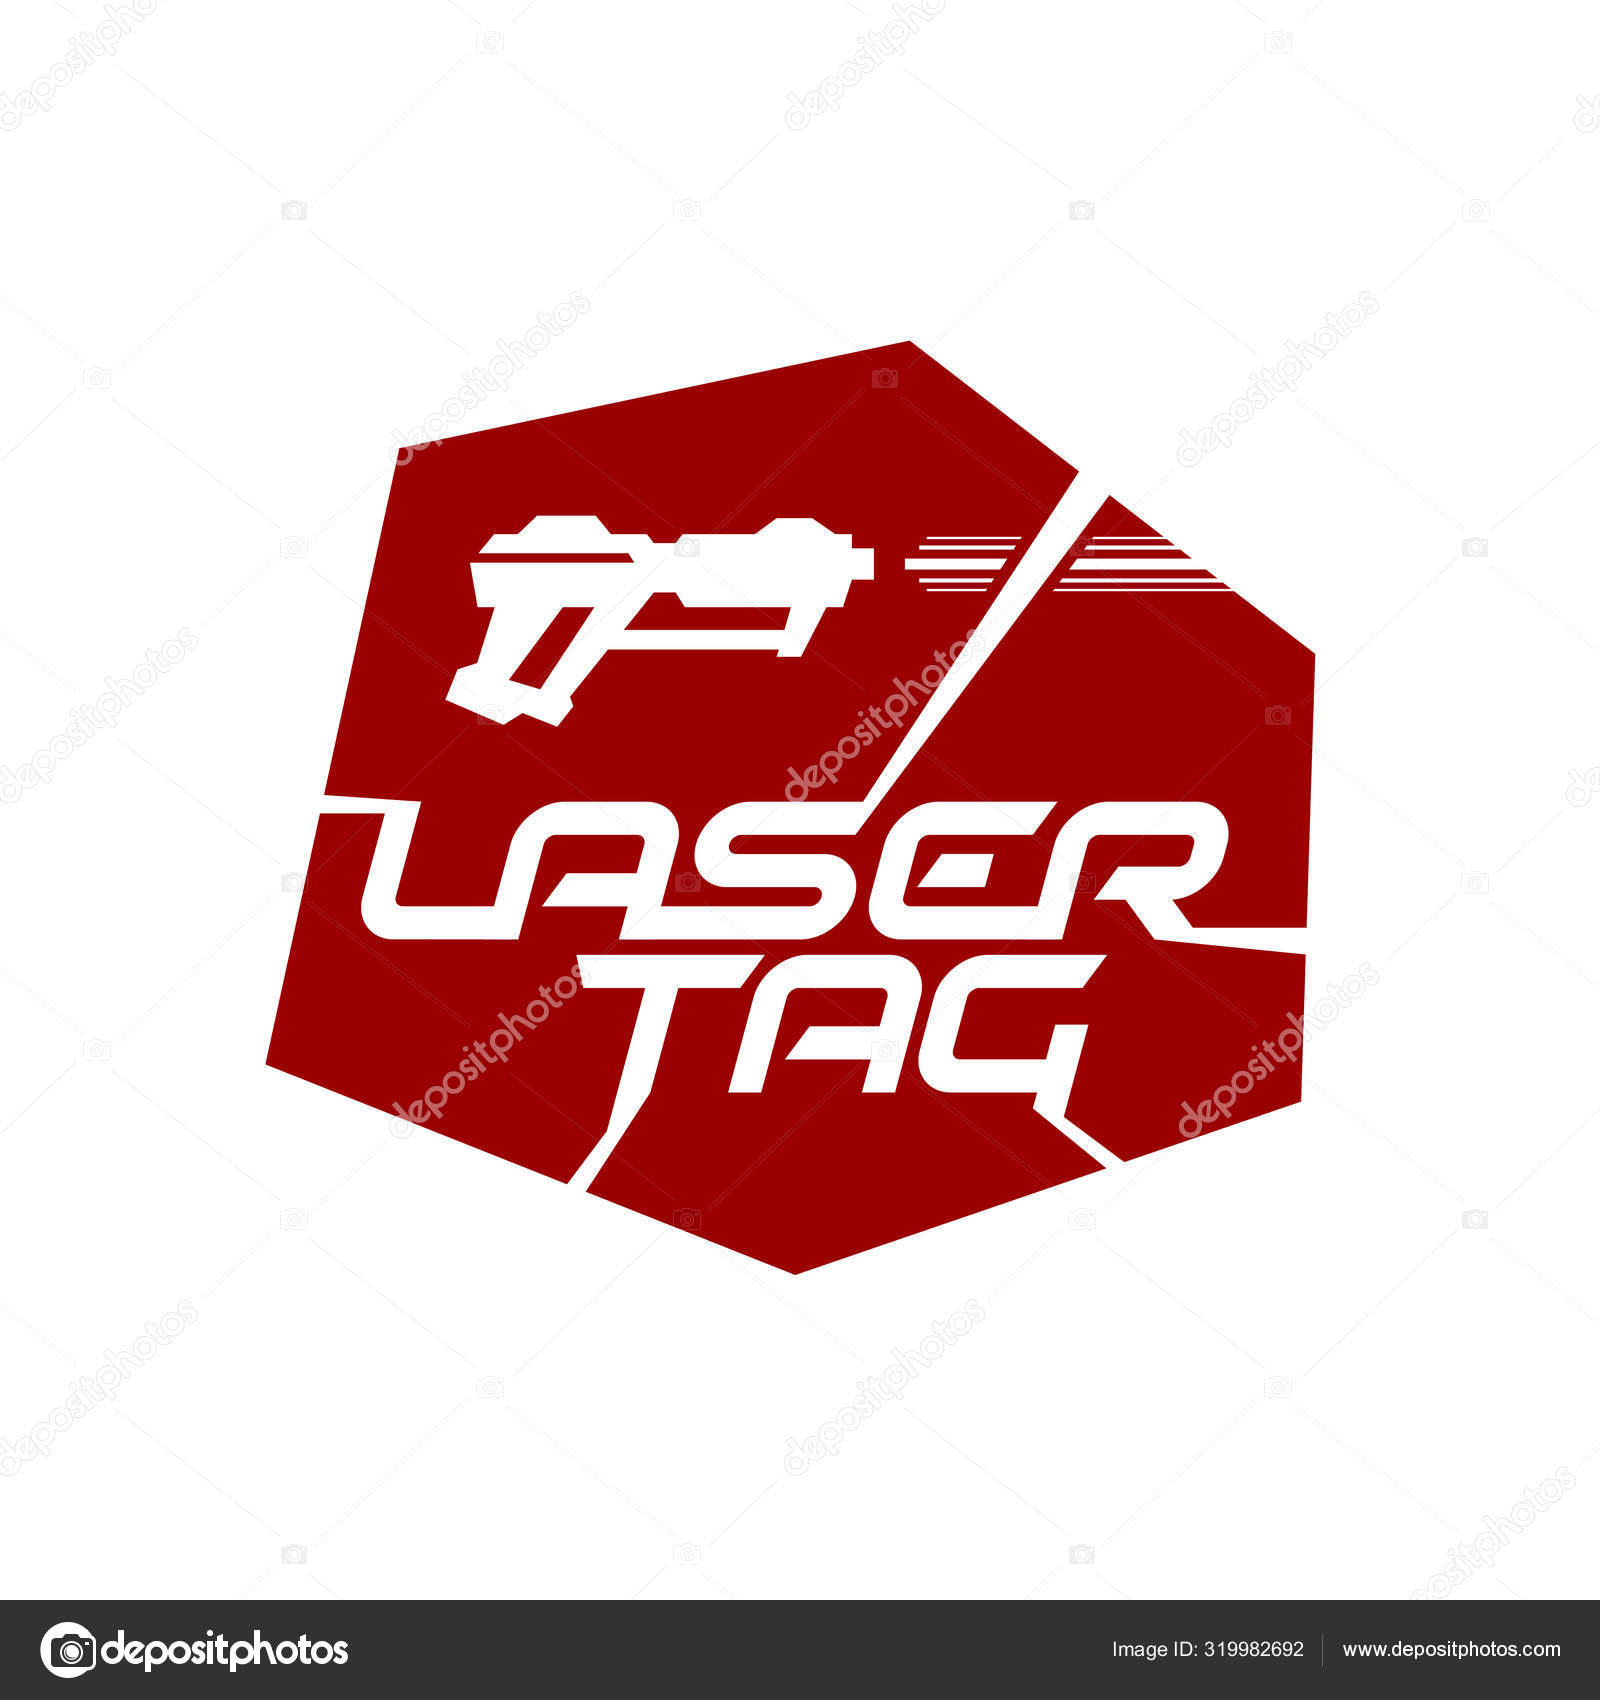 Laser tag gun game icon Royalty Free Vector Image